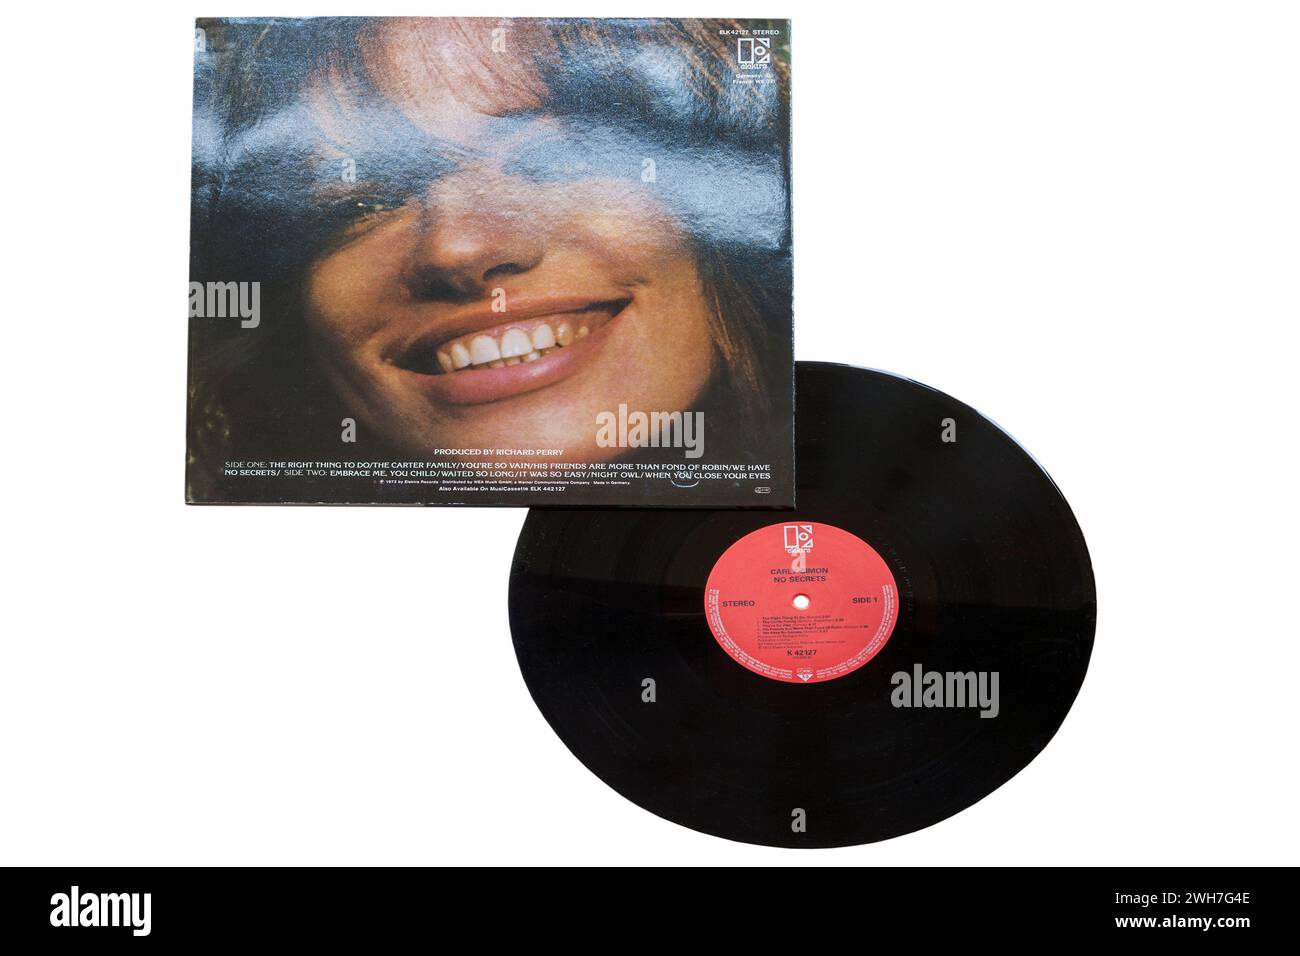 Carly Simon No Secrets vinyl record album LP cover isolated on white background - 1972 Stock Photo